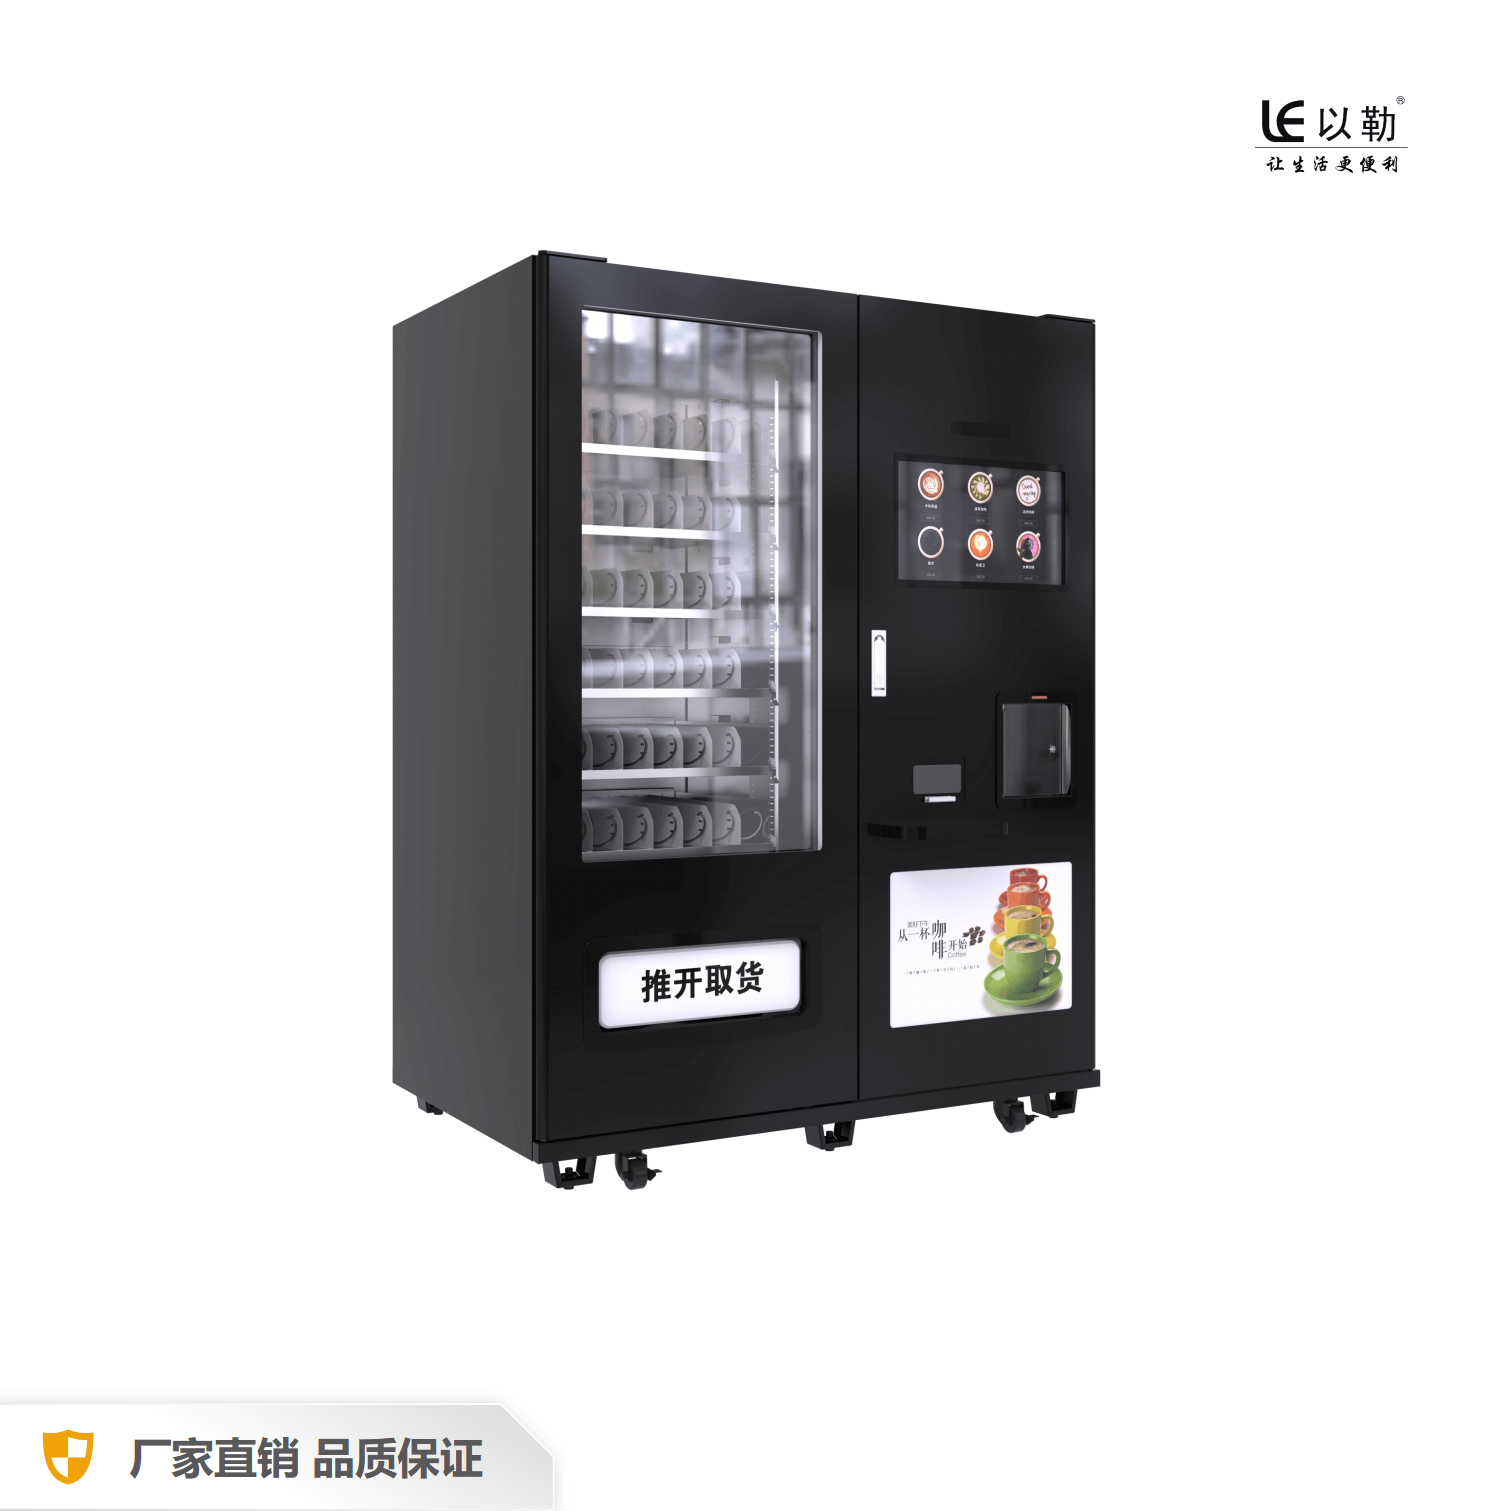 Black High Performance Smart Combo Vending Machine